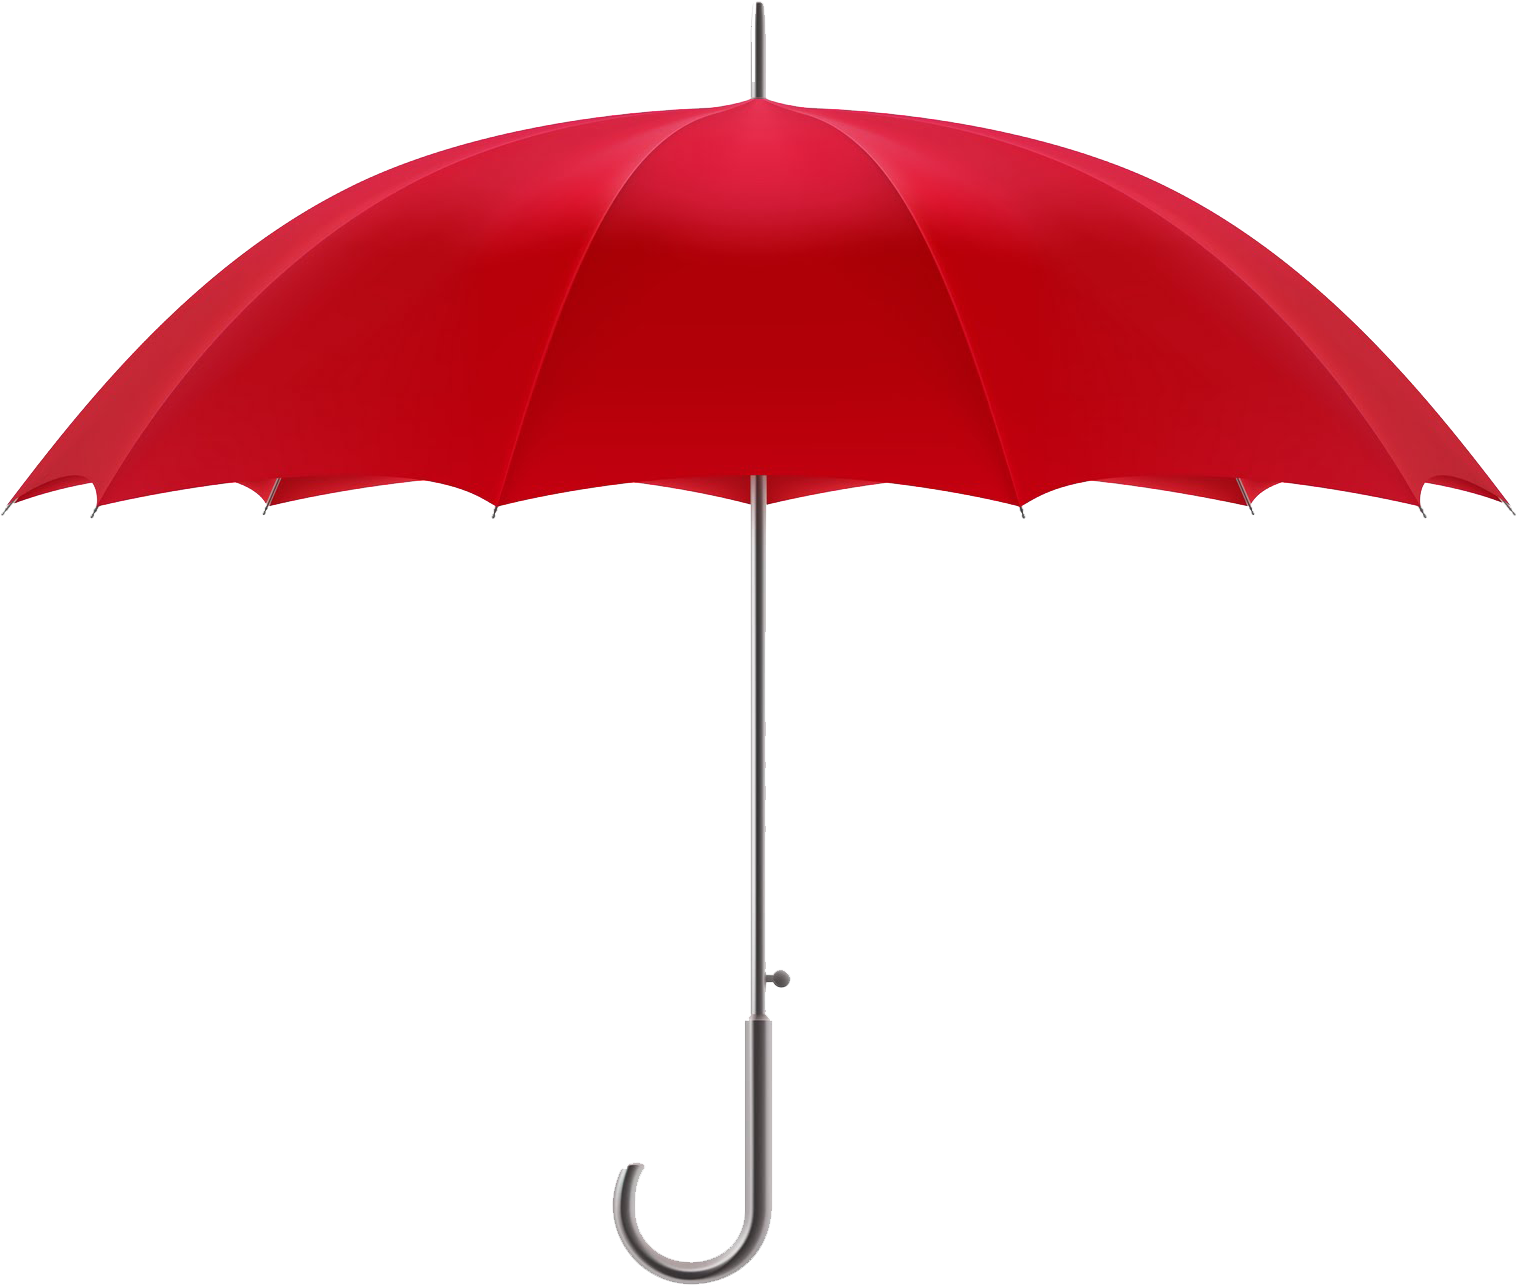 Free Umbrella Transparent Background Download Free Umbrella